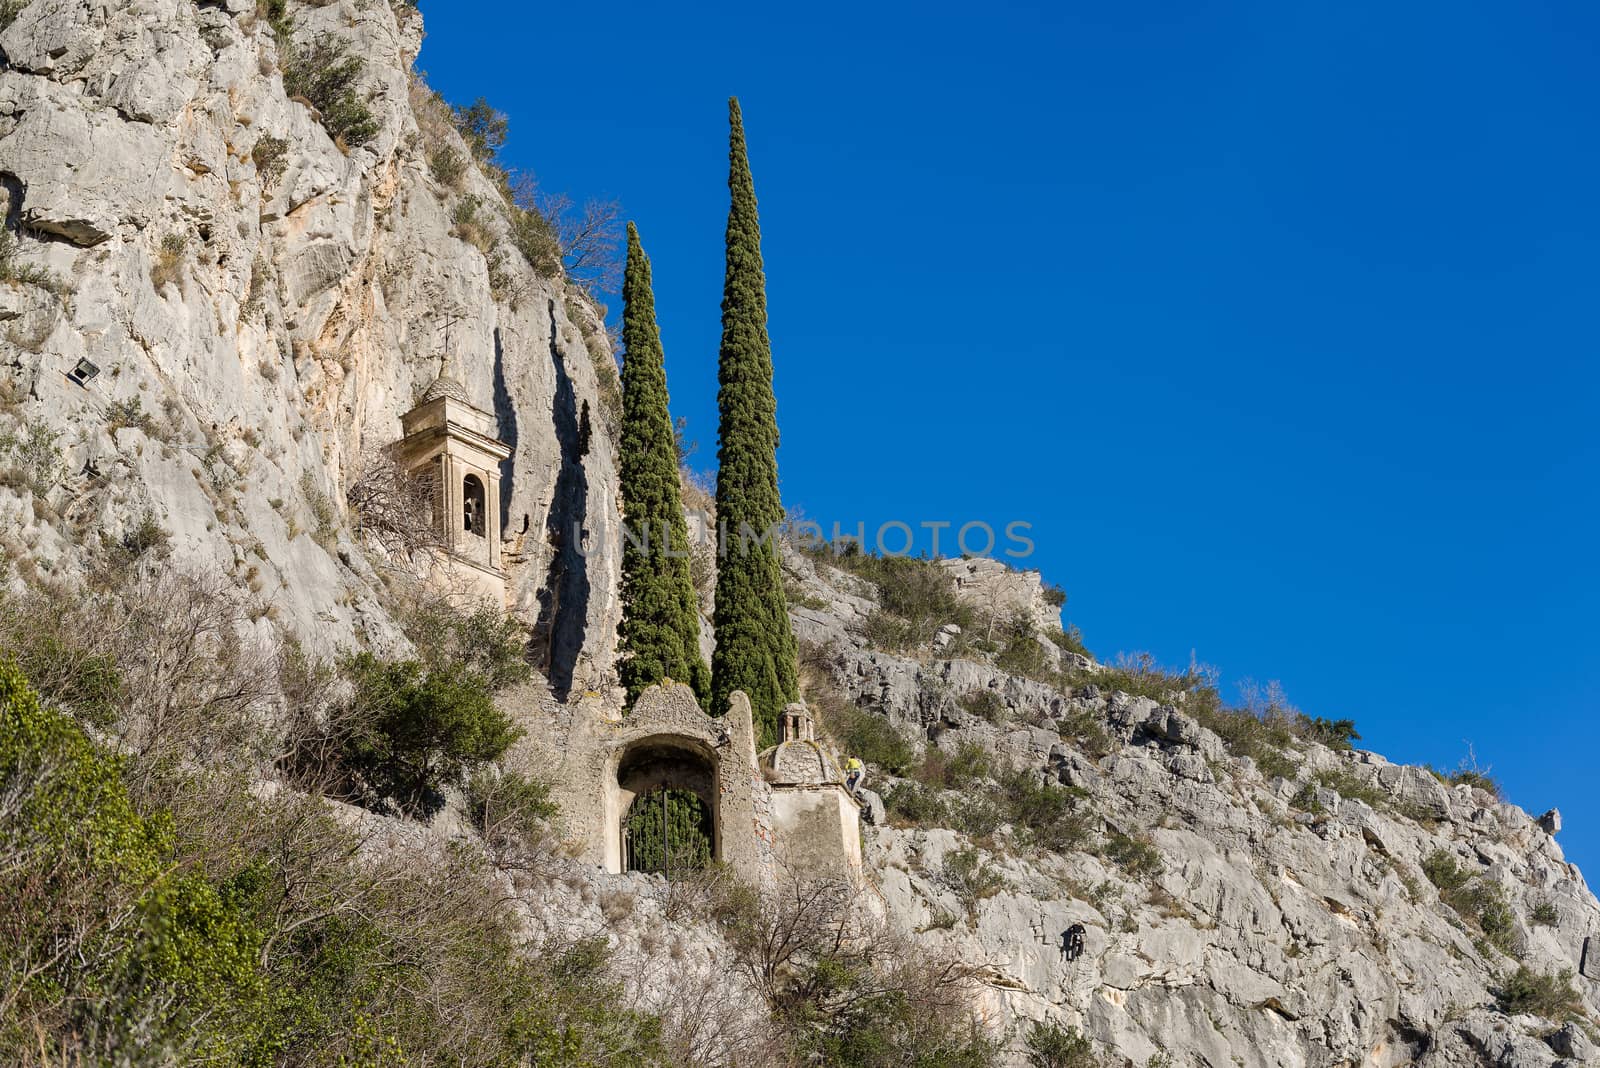 The Rock Sanctuary of Santa Lucia, in the ligurian village of Toirano